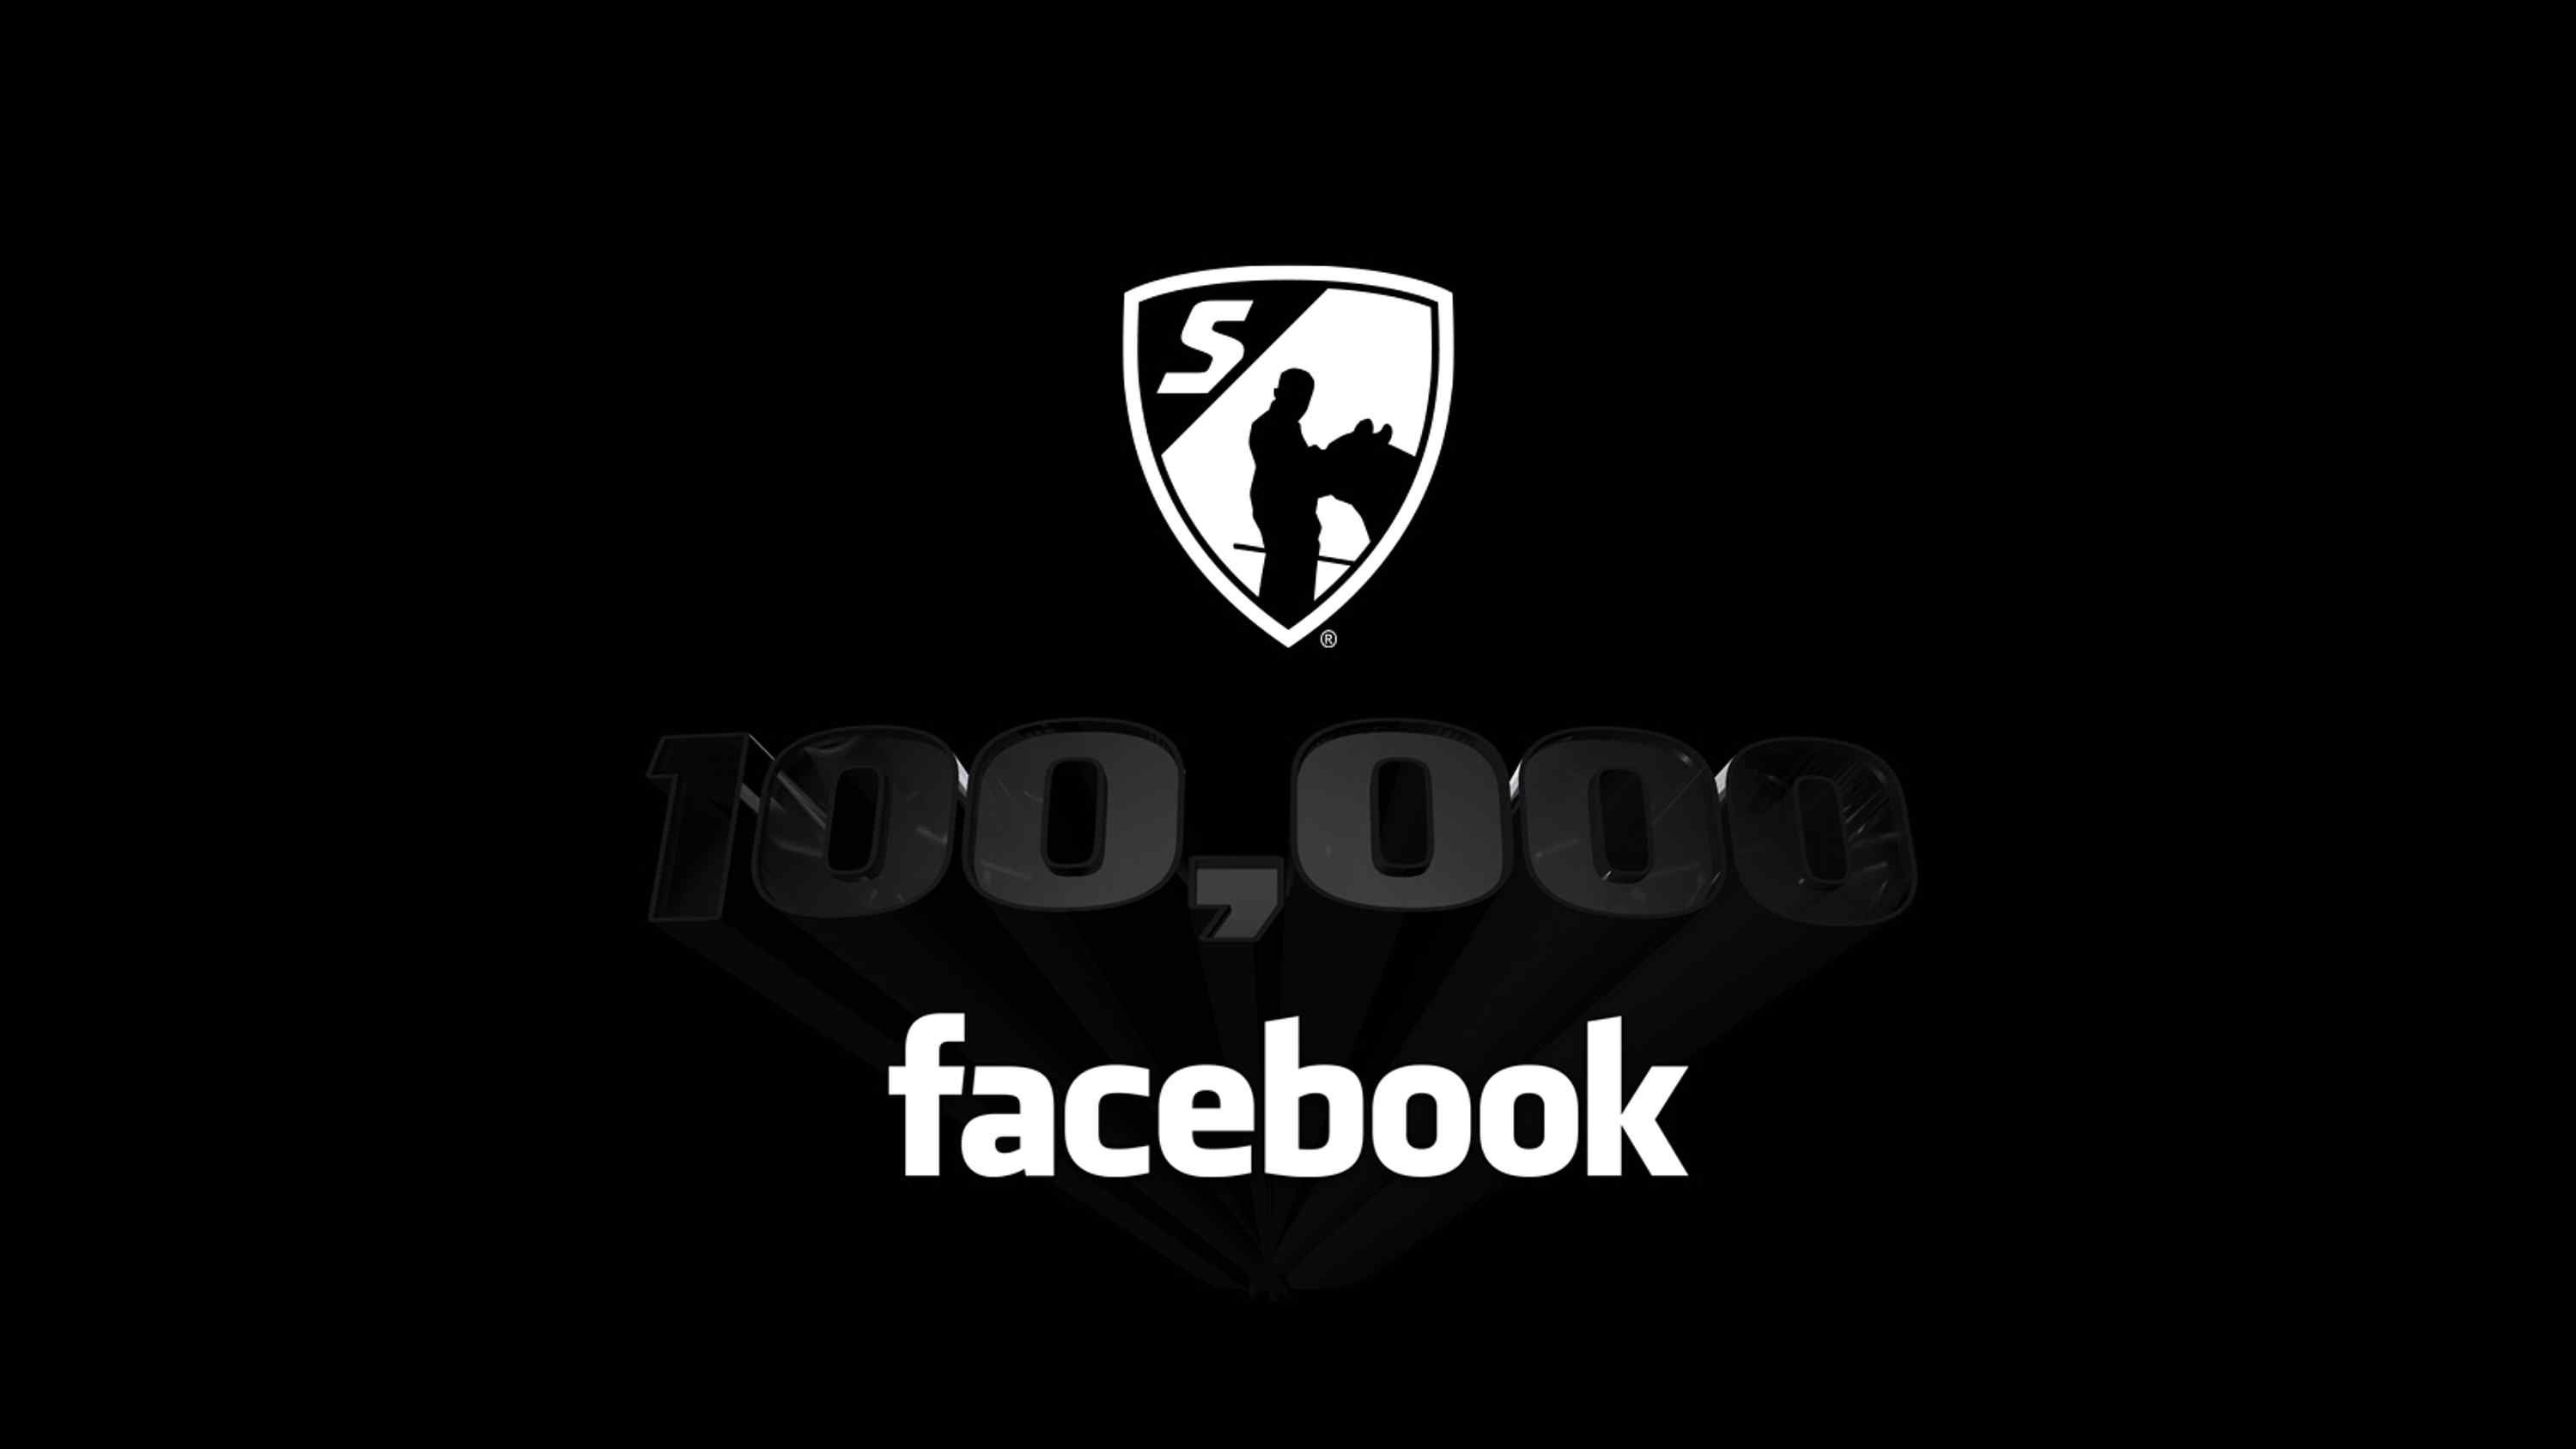 100,000 Facebook